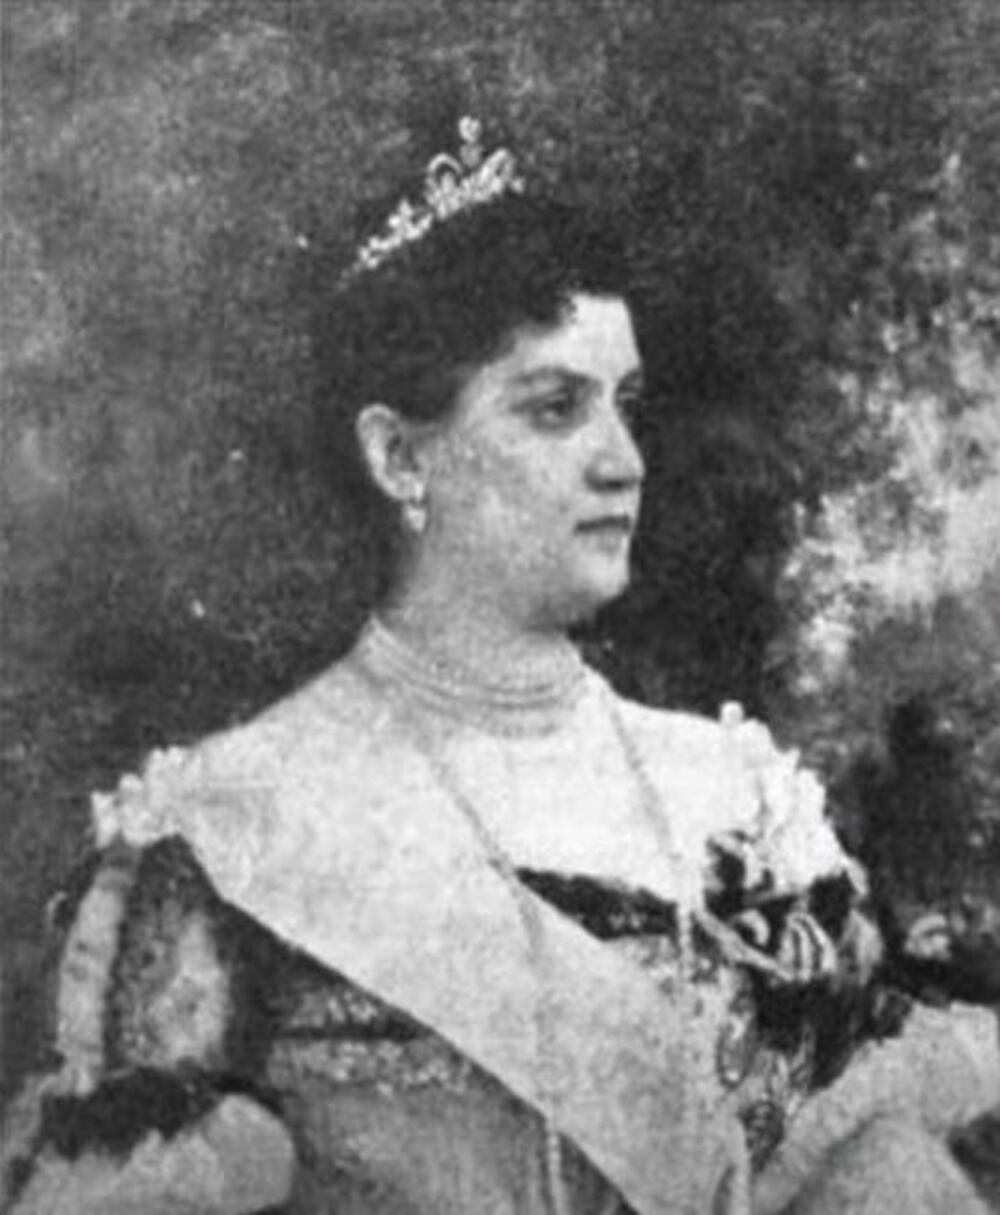 Kraljica Draga Obrenović, Kraljica, Žena